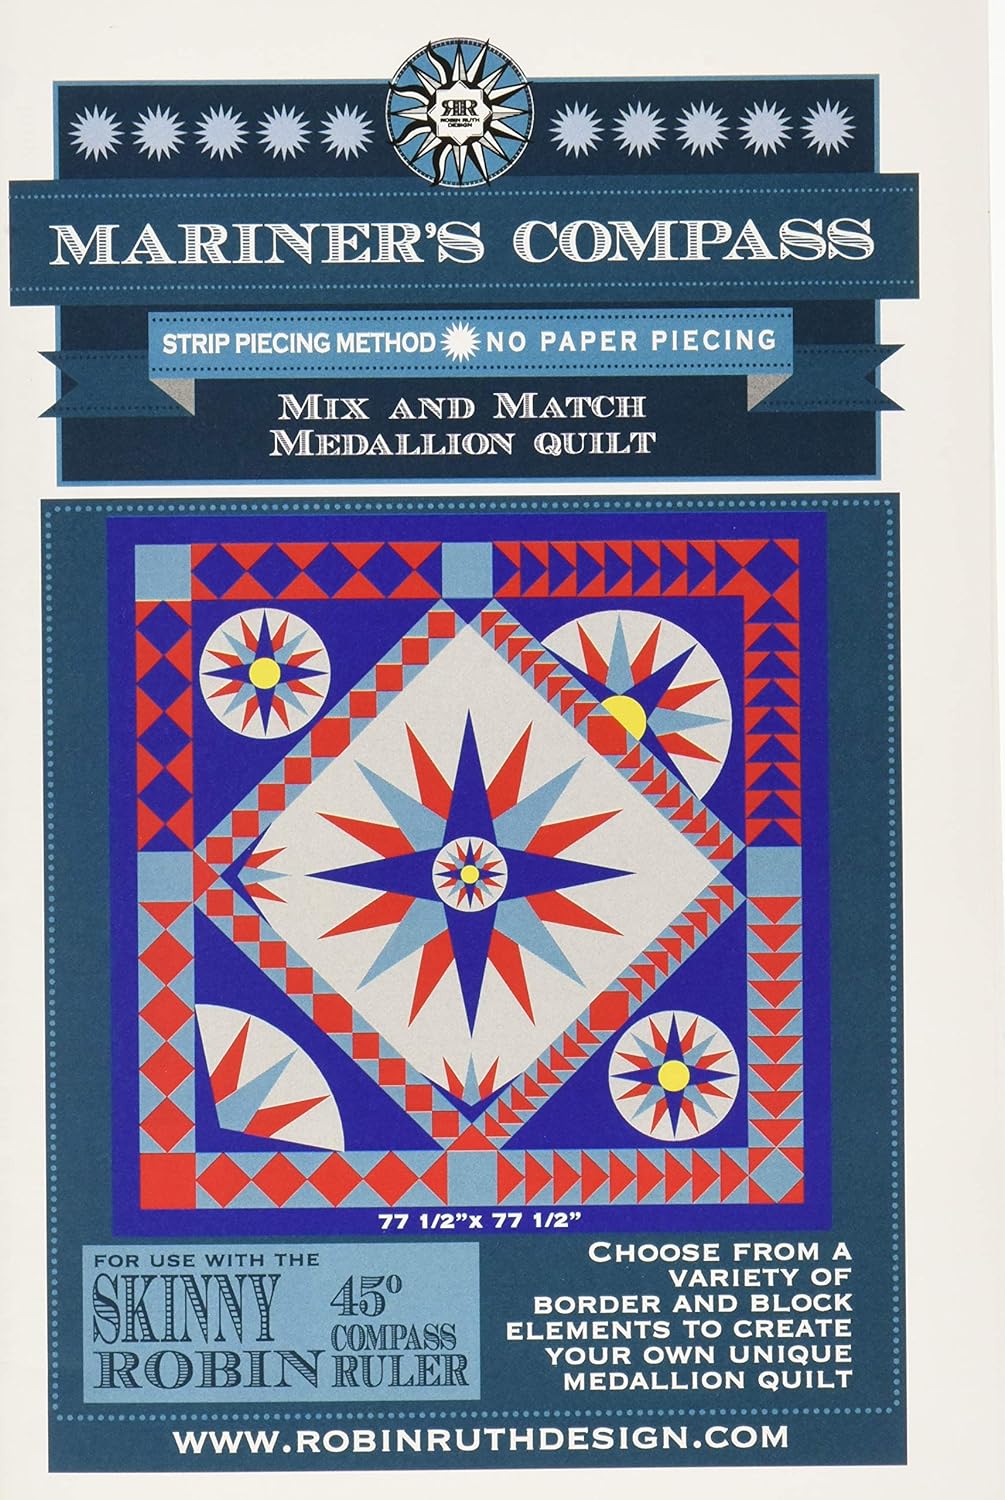 Mariner's Compass - Mix and Match Medallion Quilt